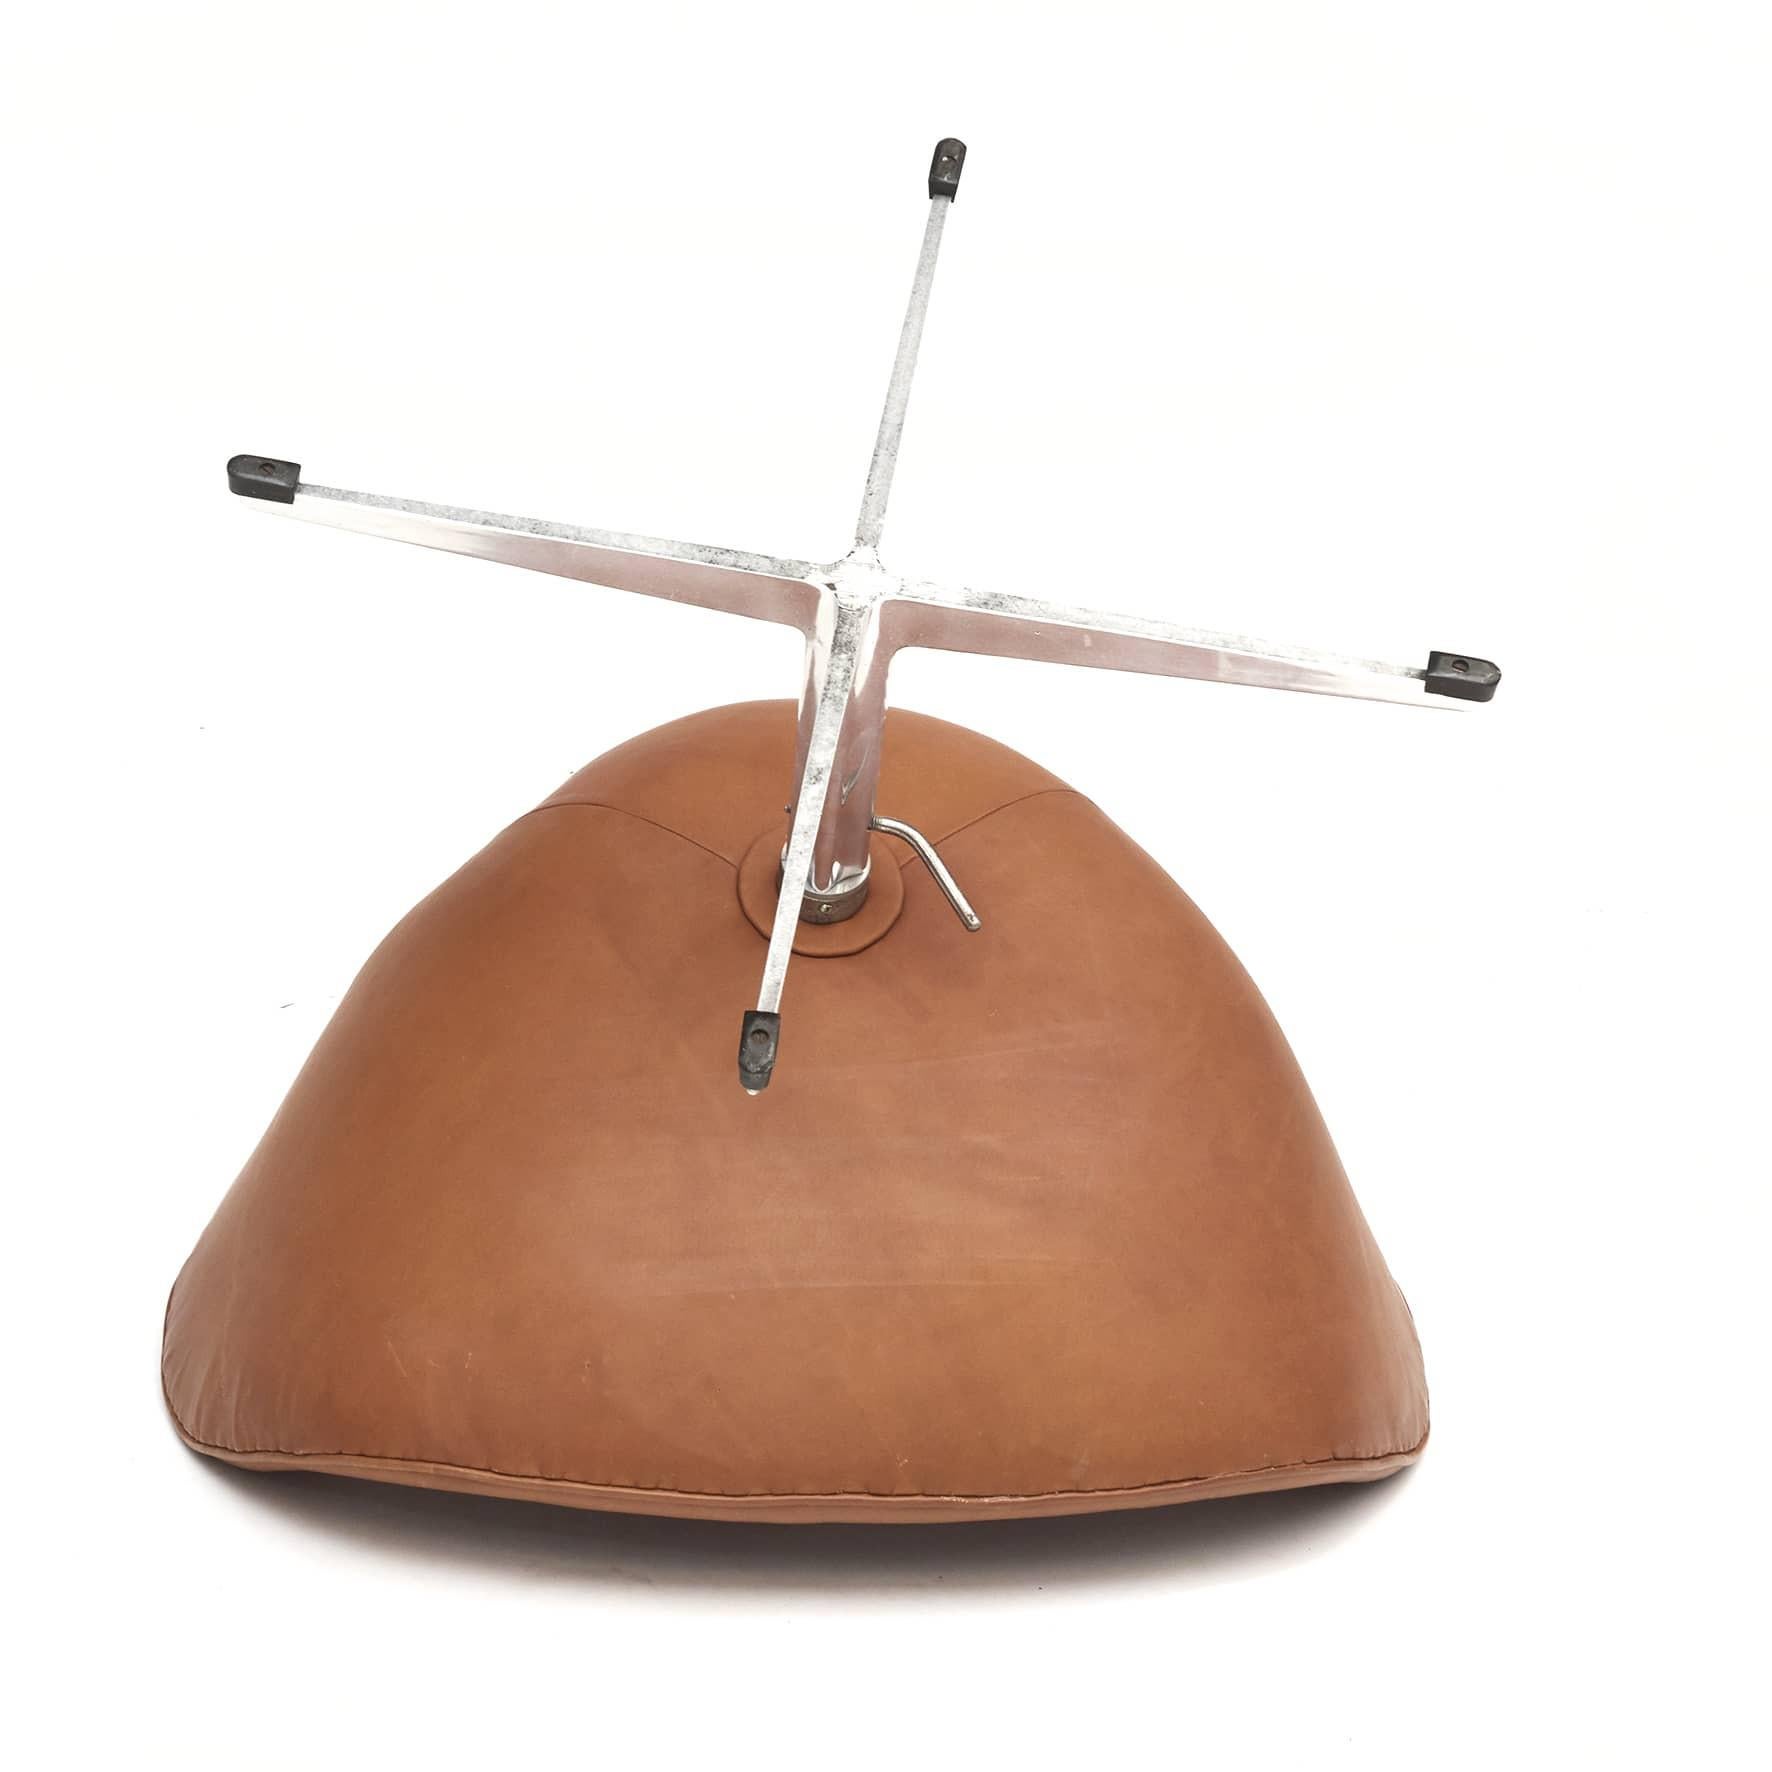 Svanen or Swan Chair by Arne Jacobsen 1